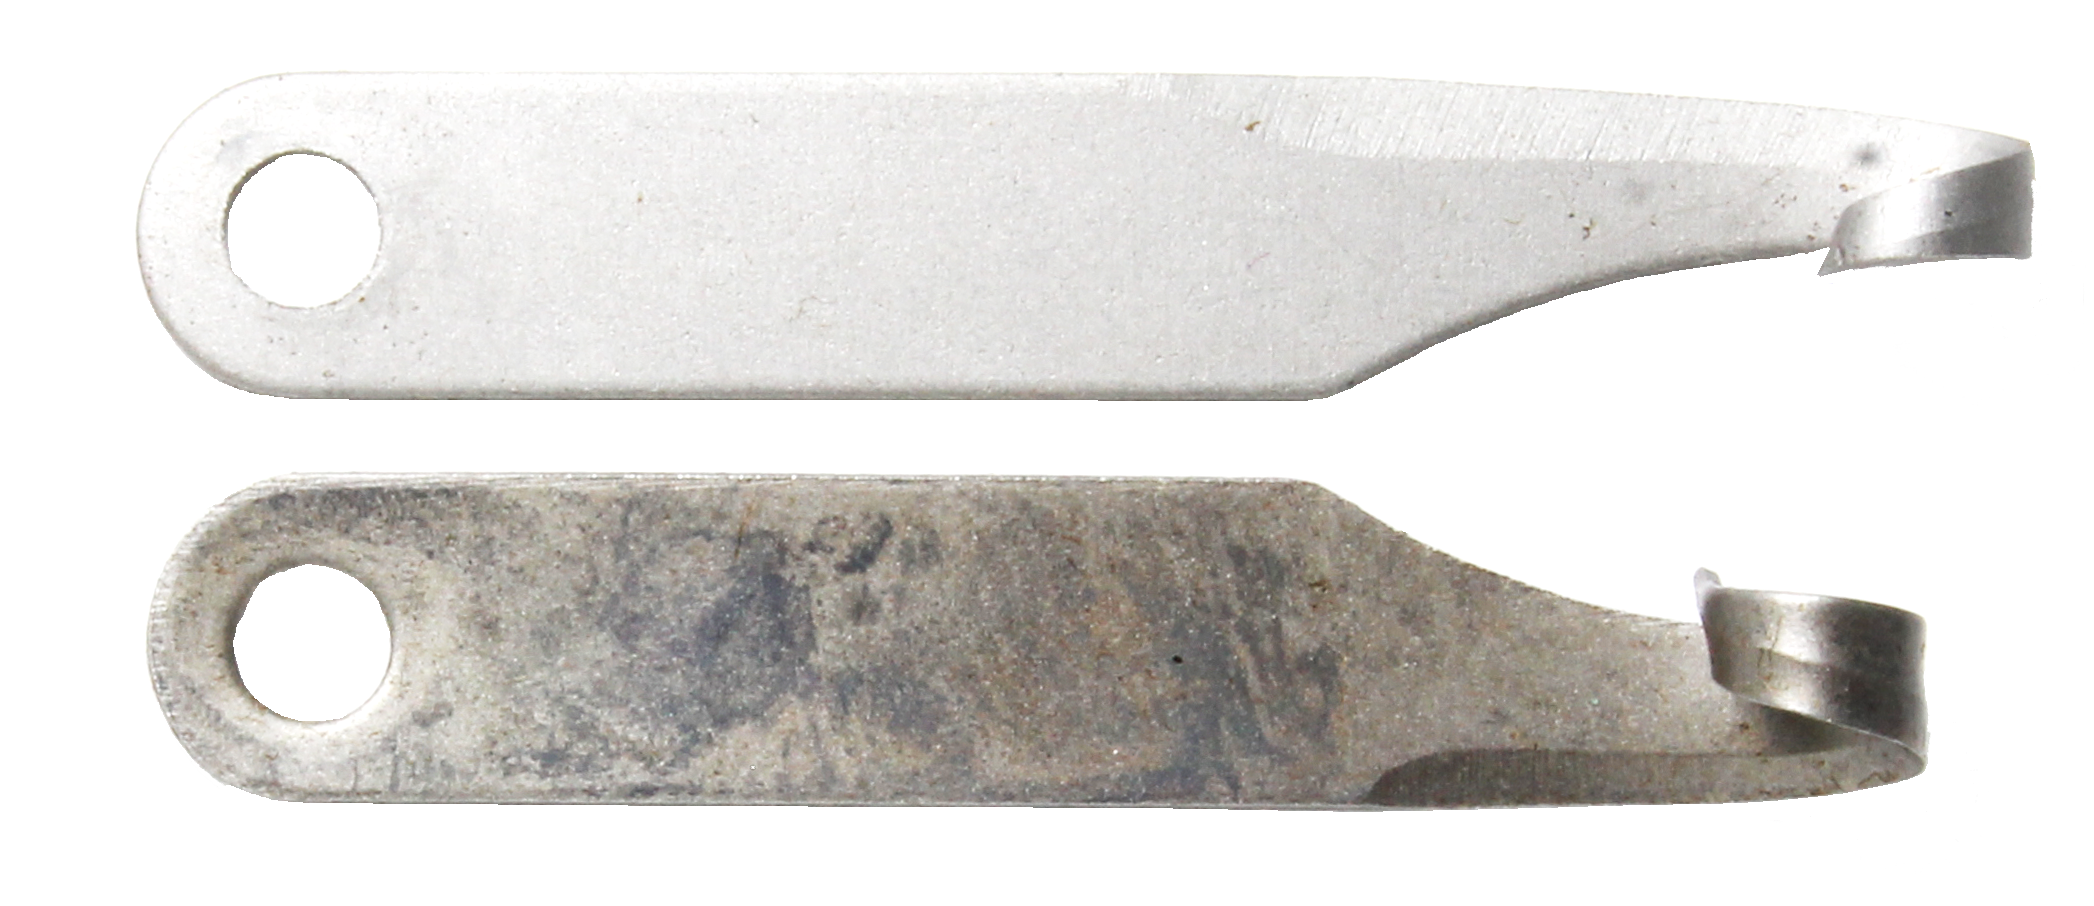 794: Small 3/16" Radius Carving Blades